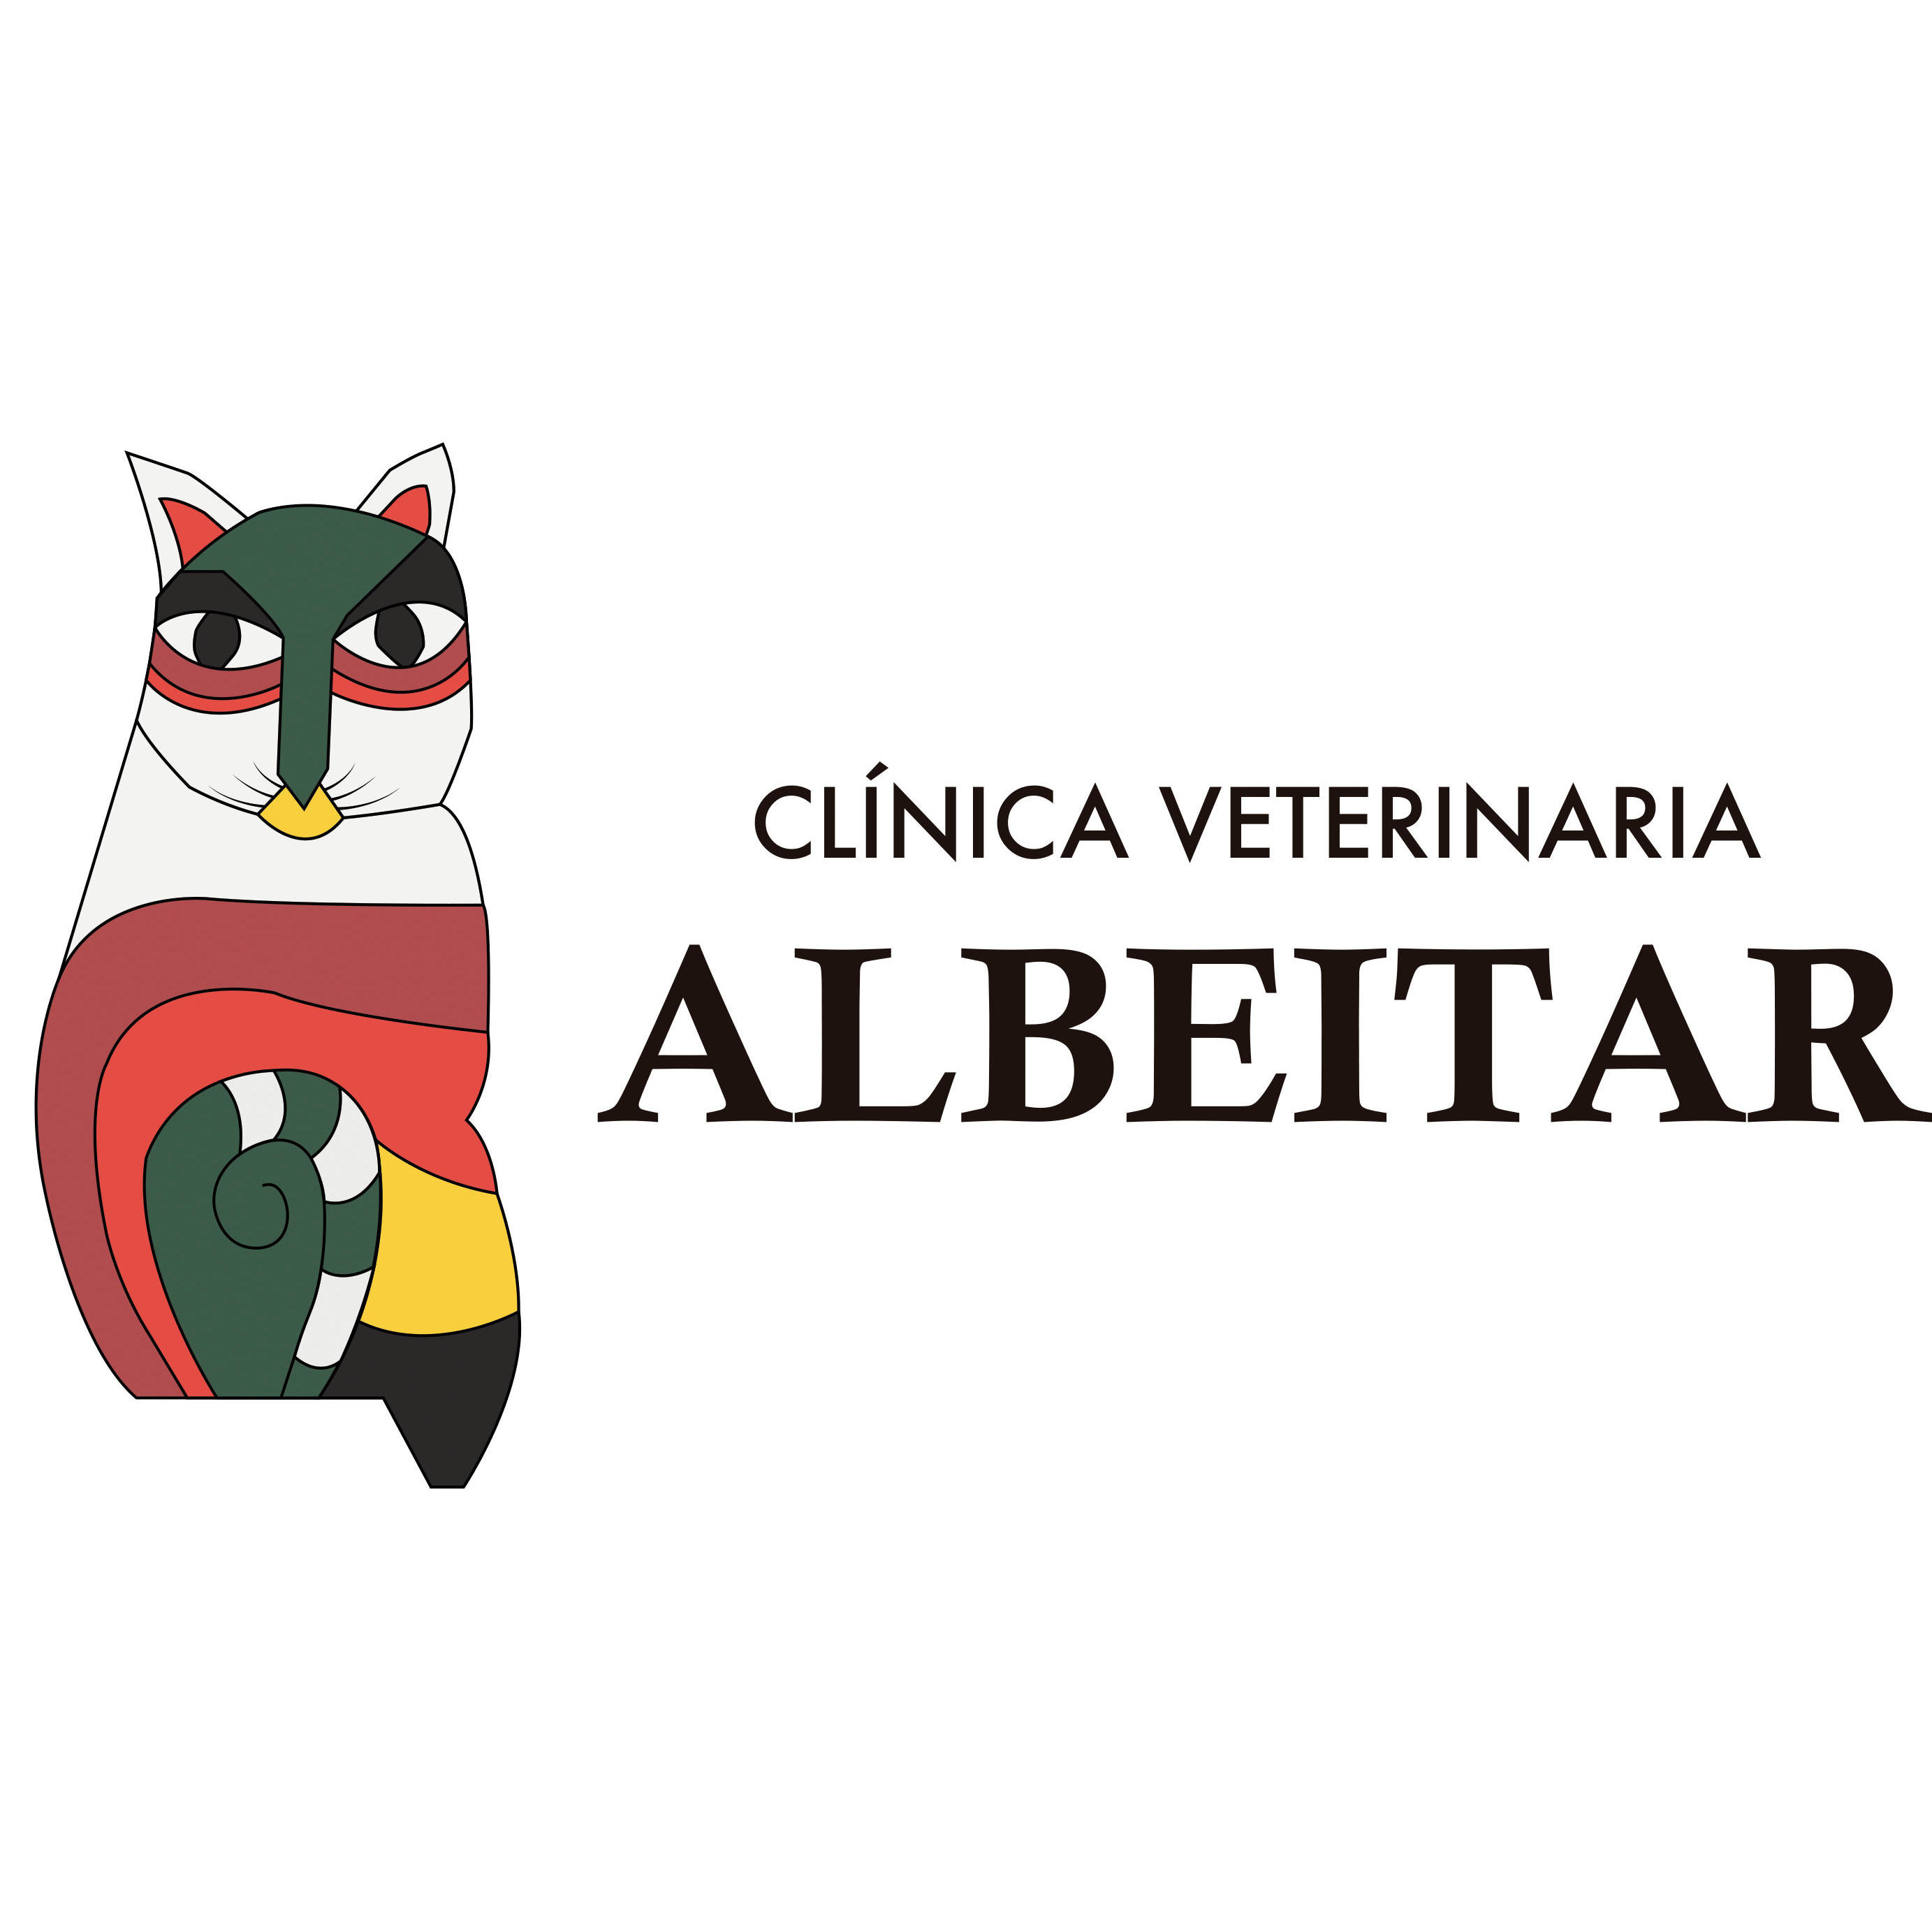 Clínica Veterinaria Albeitar Logo